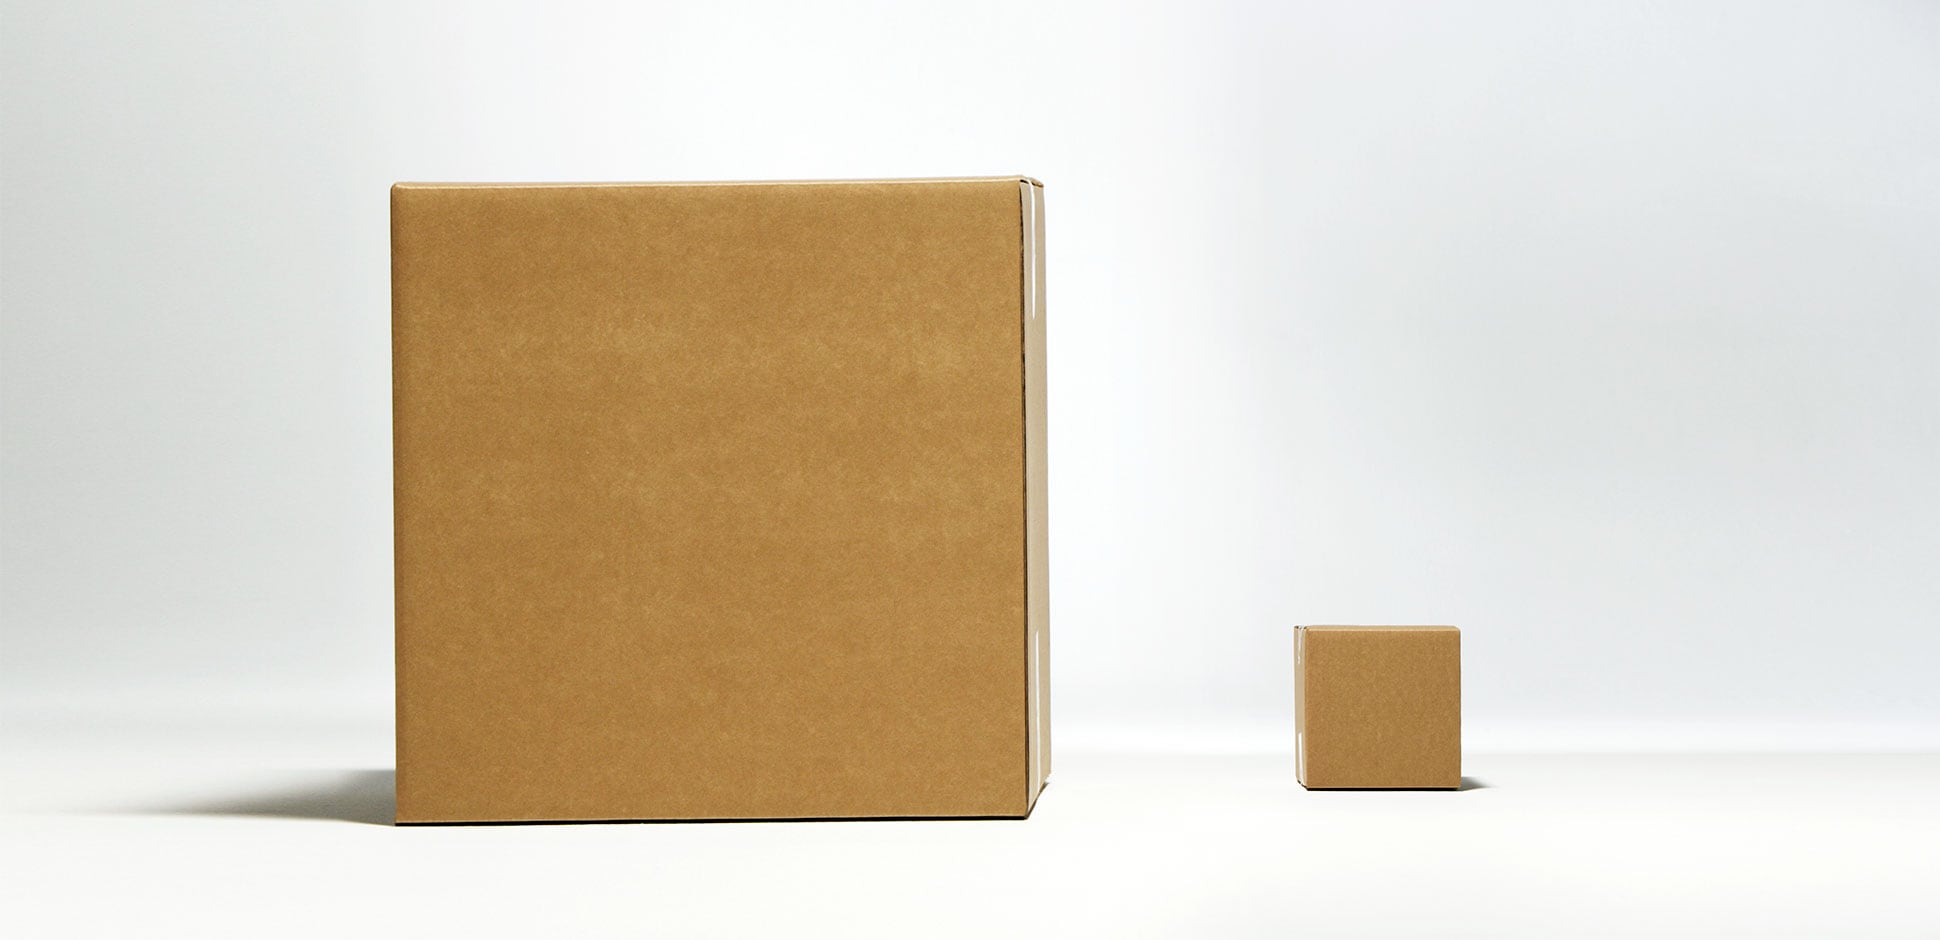 boxes.jpg